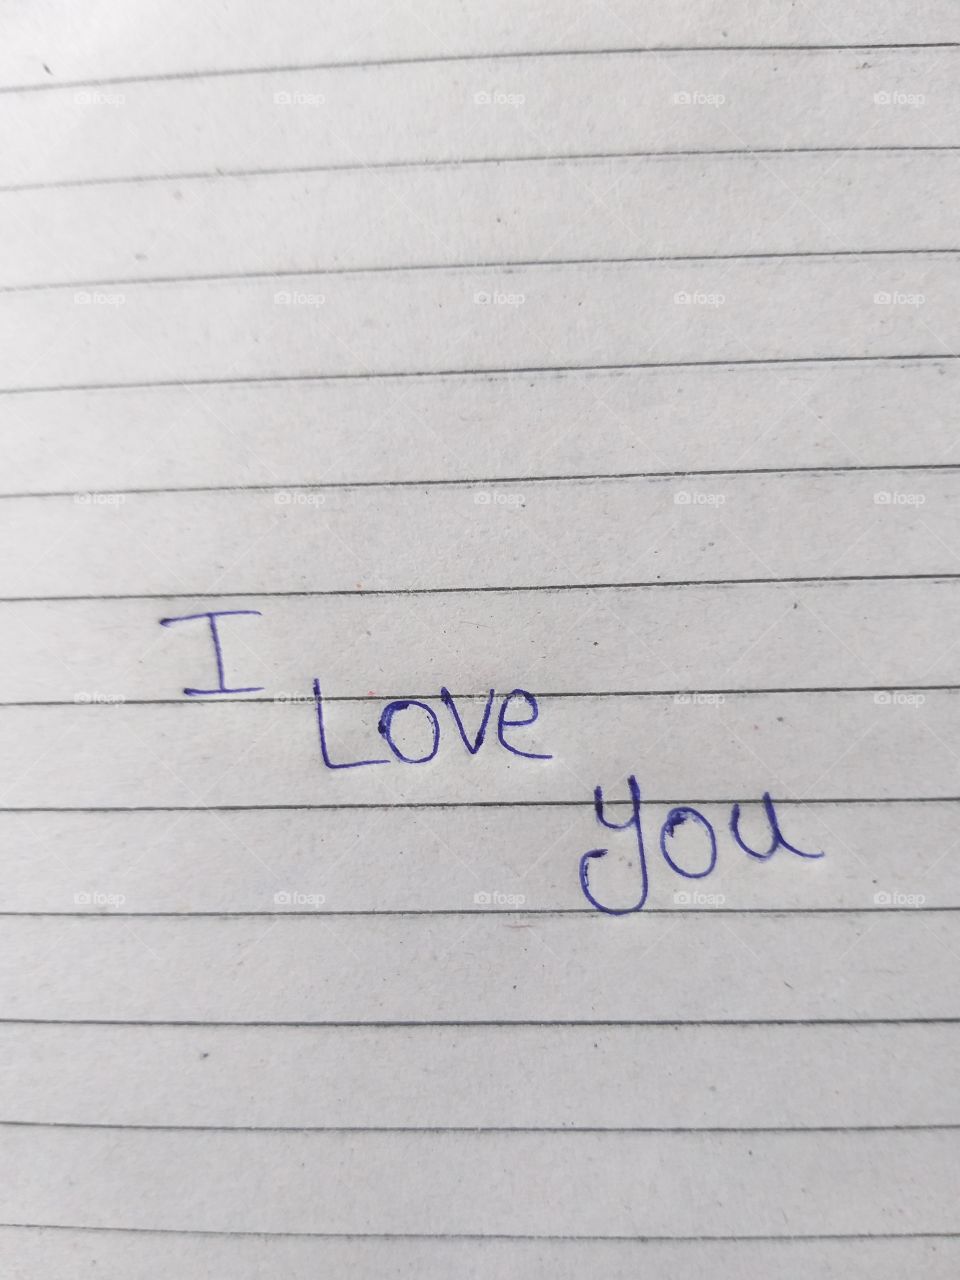 i love you...